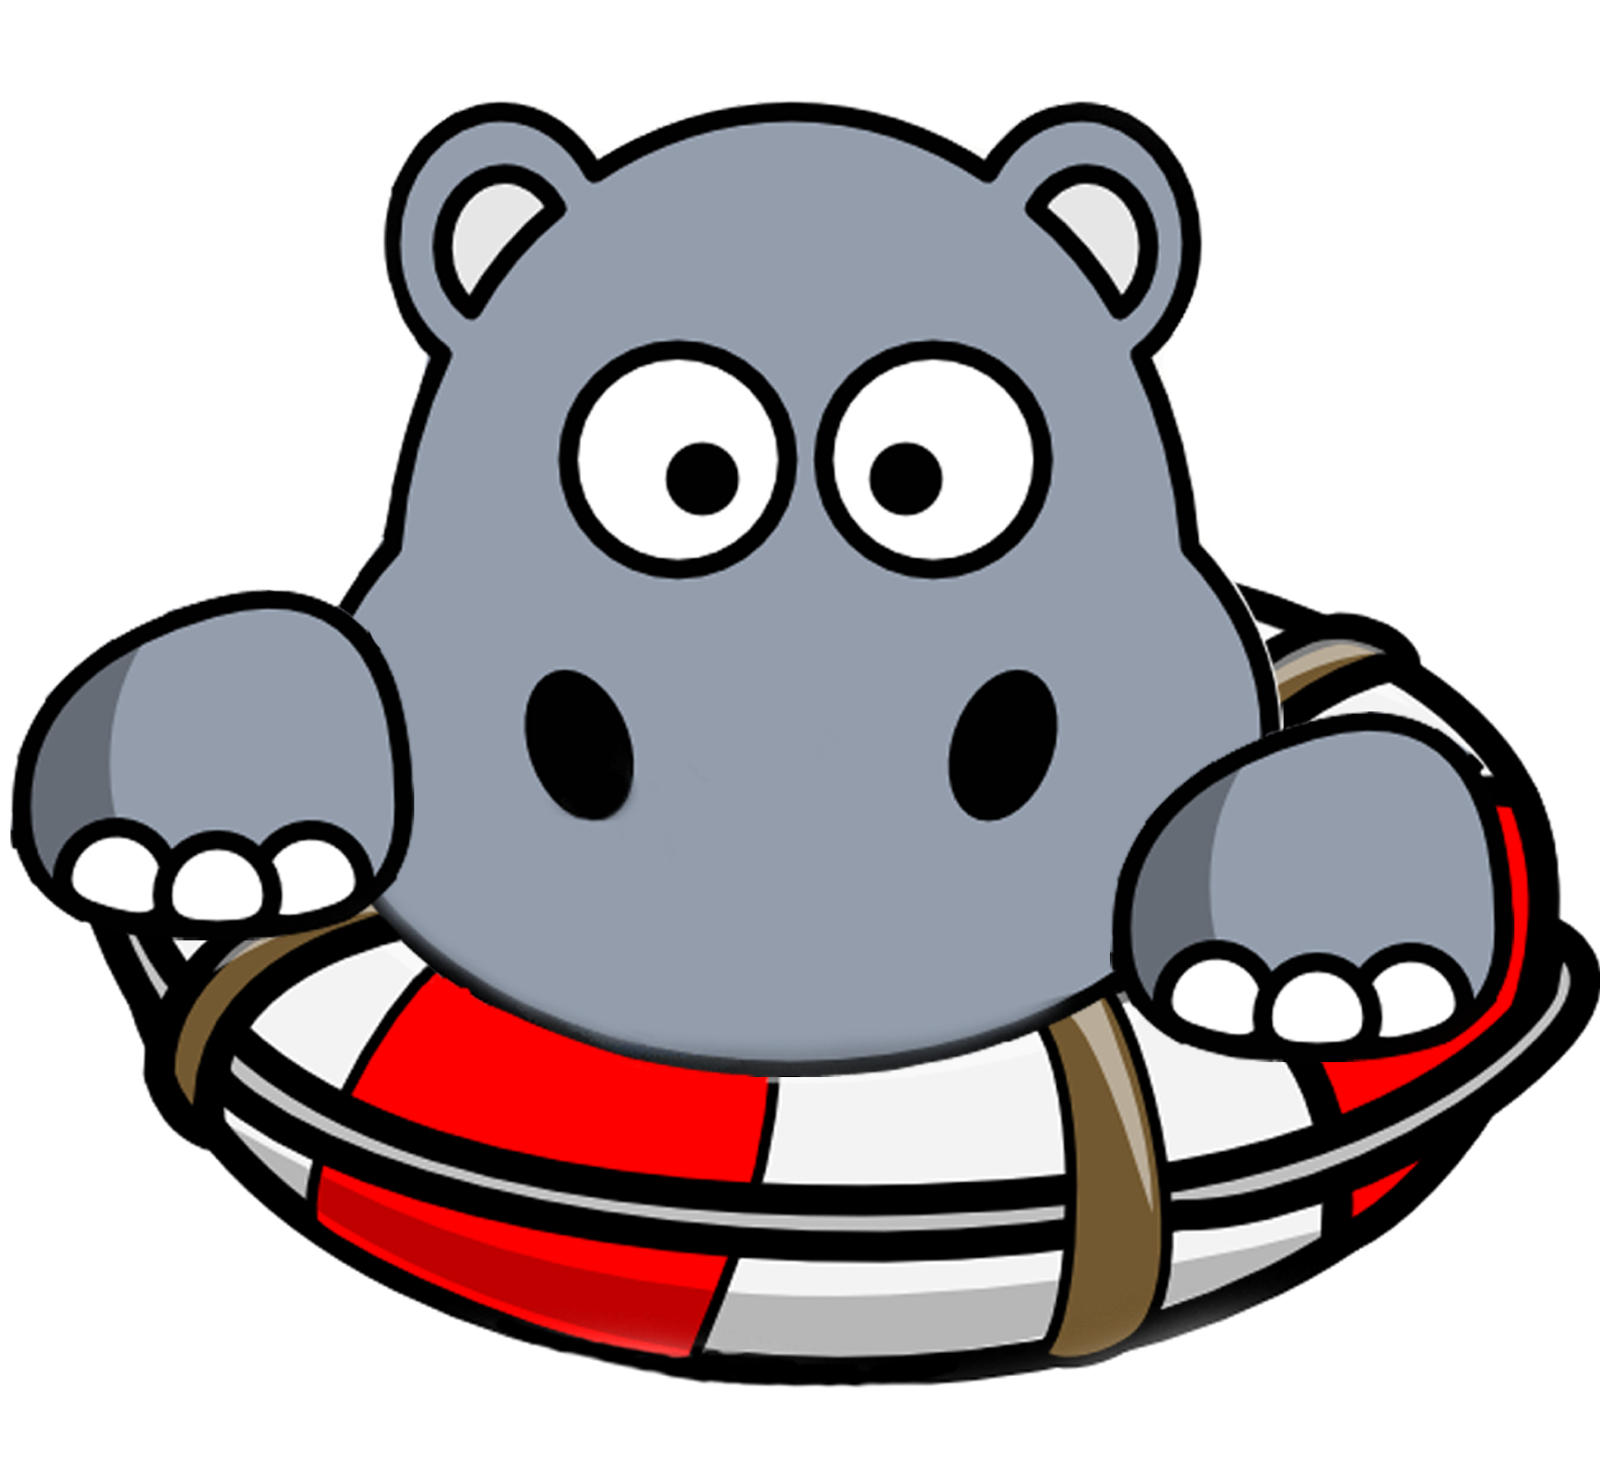 Hippopotamus clipart swimming. Savana enterprise pte ltd